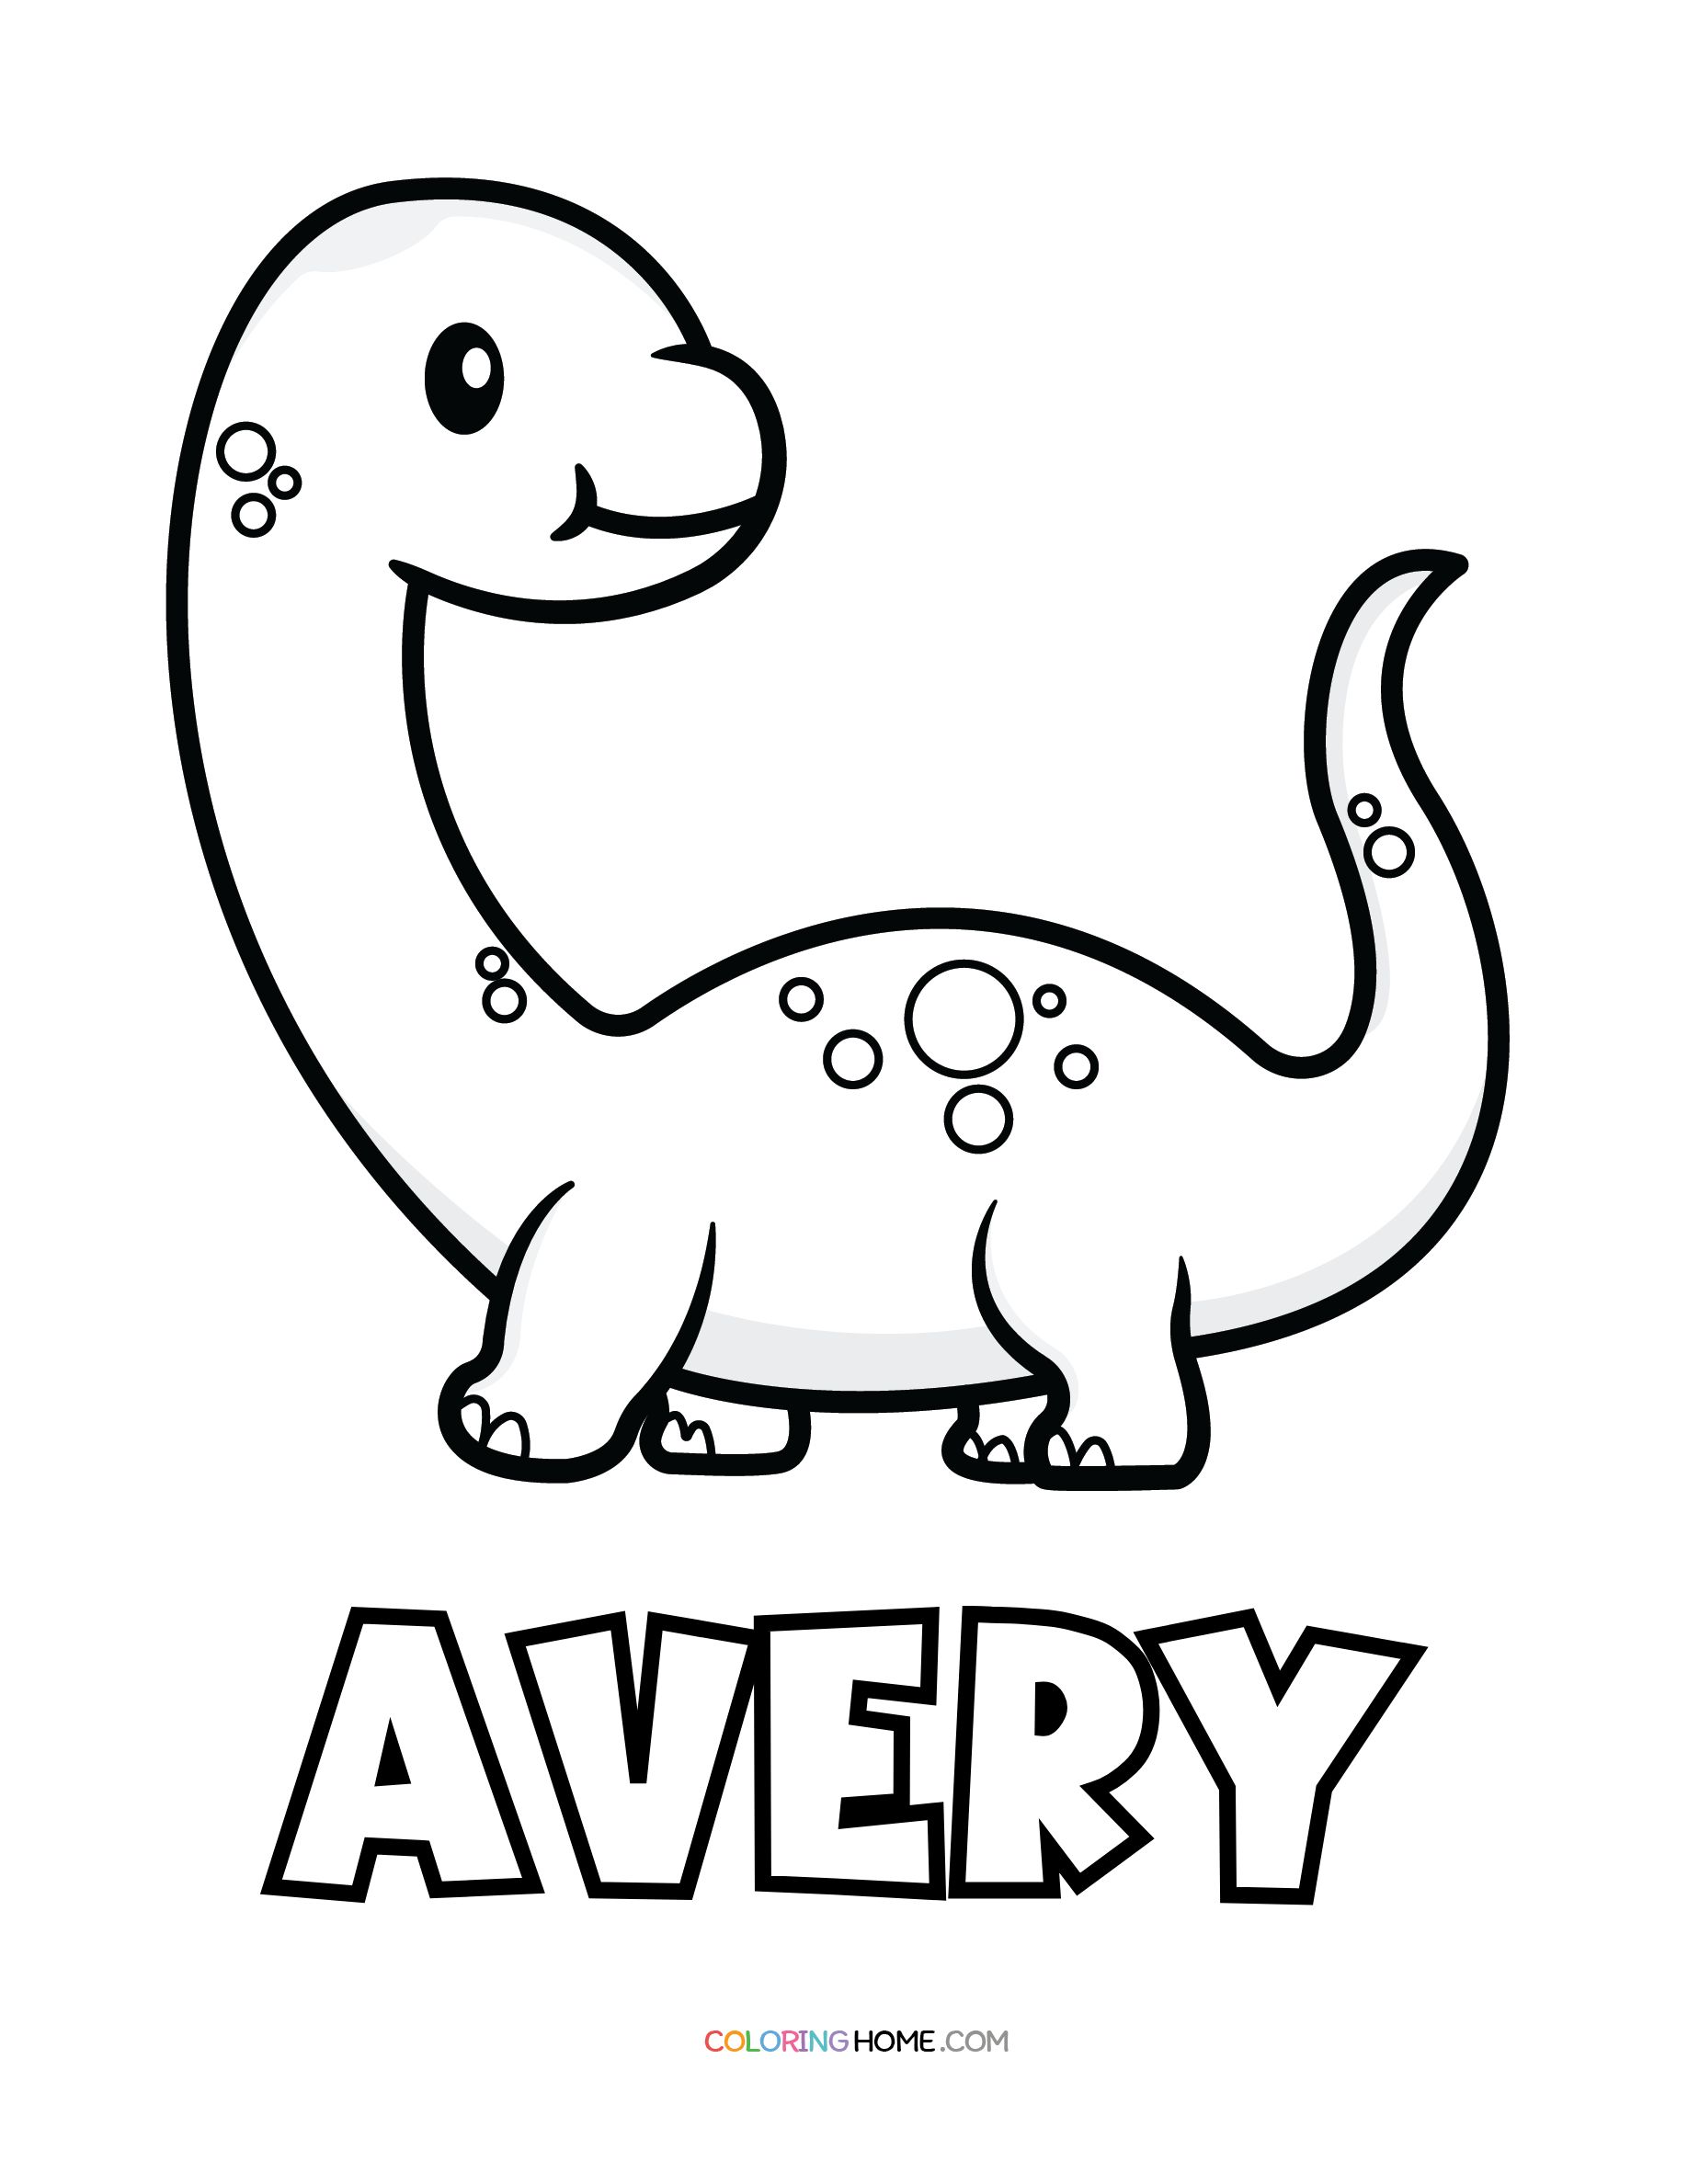 Avery dinosaur coloring page